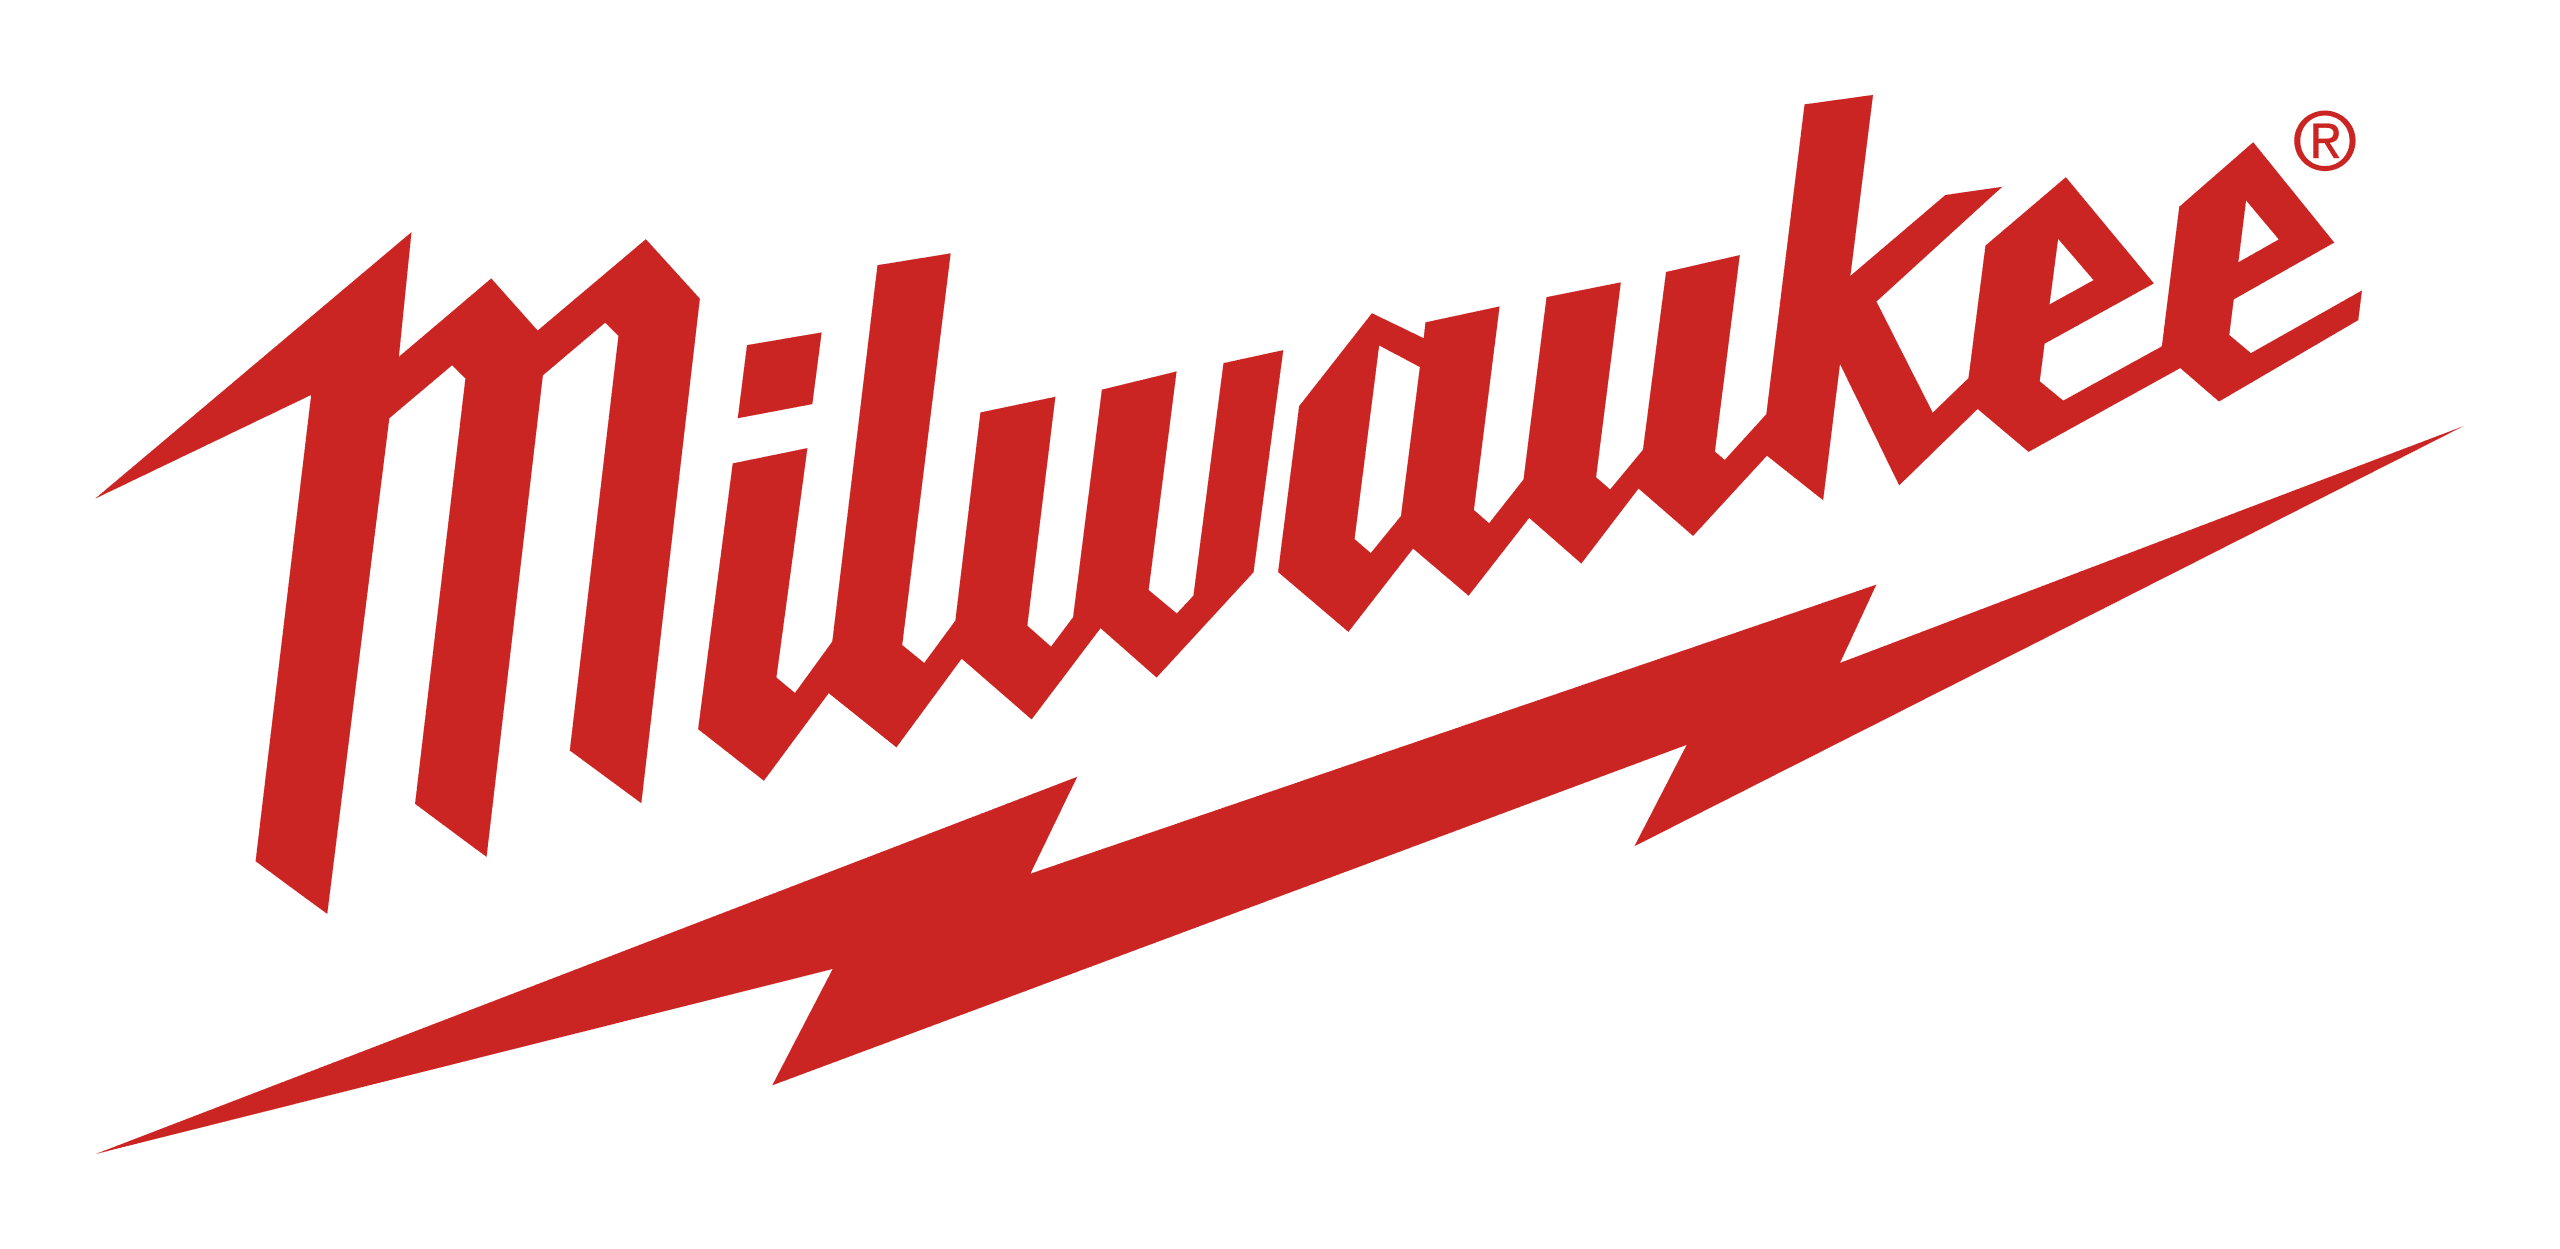 2560px-Milwaukee_Logo.svg